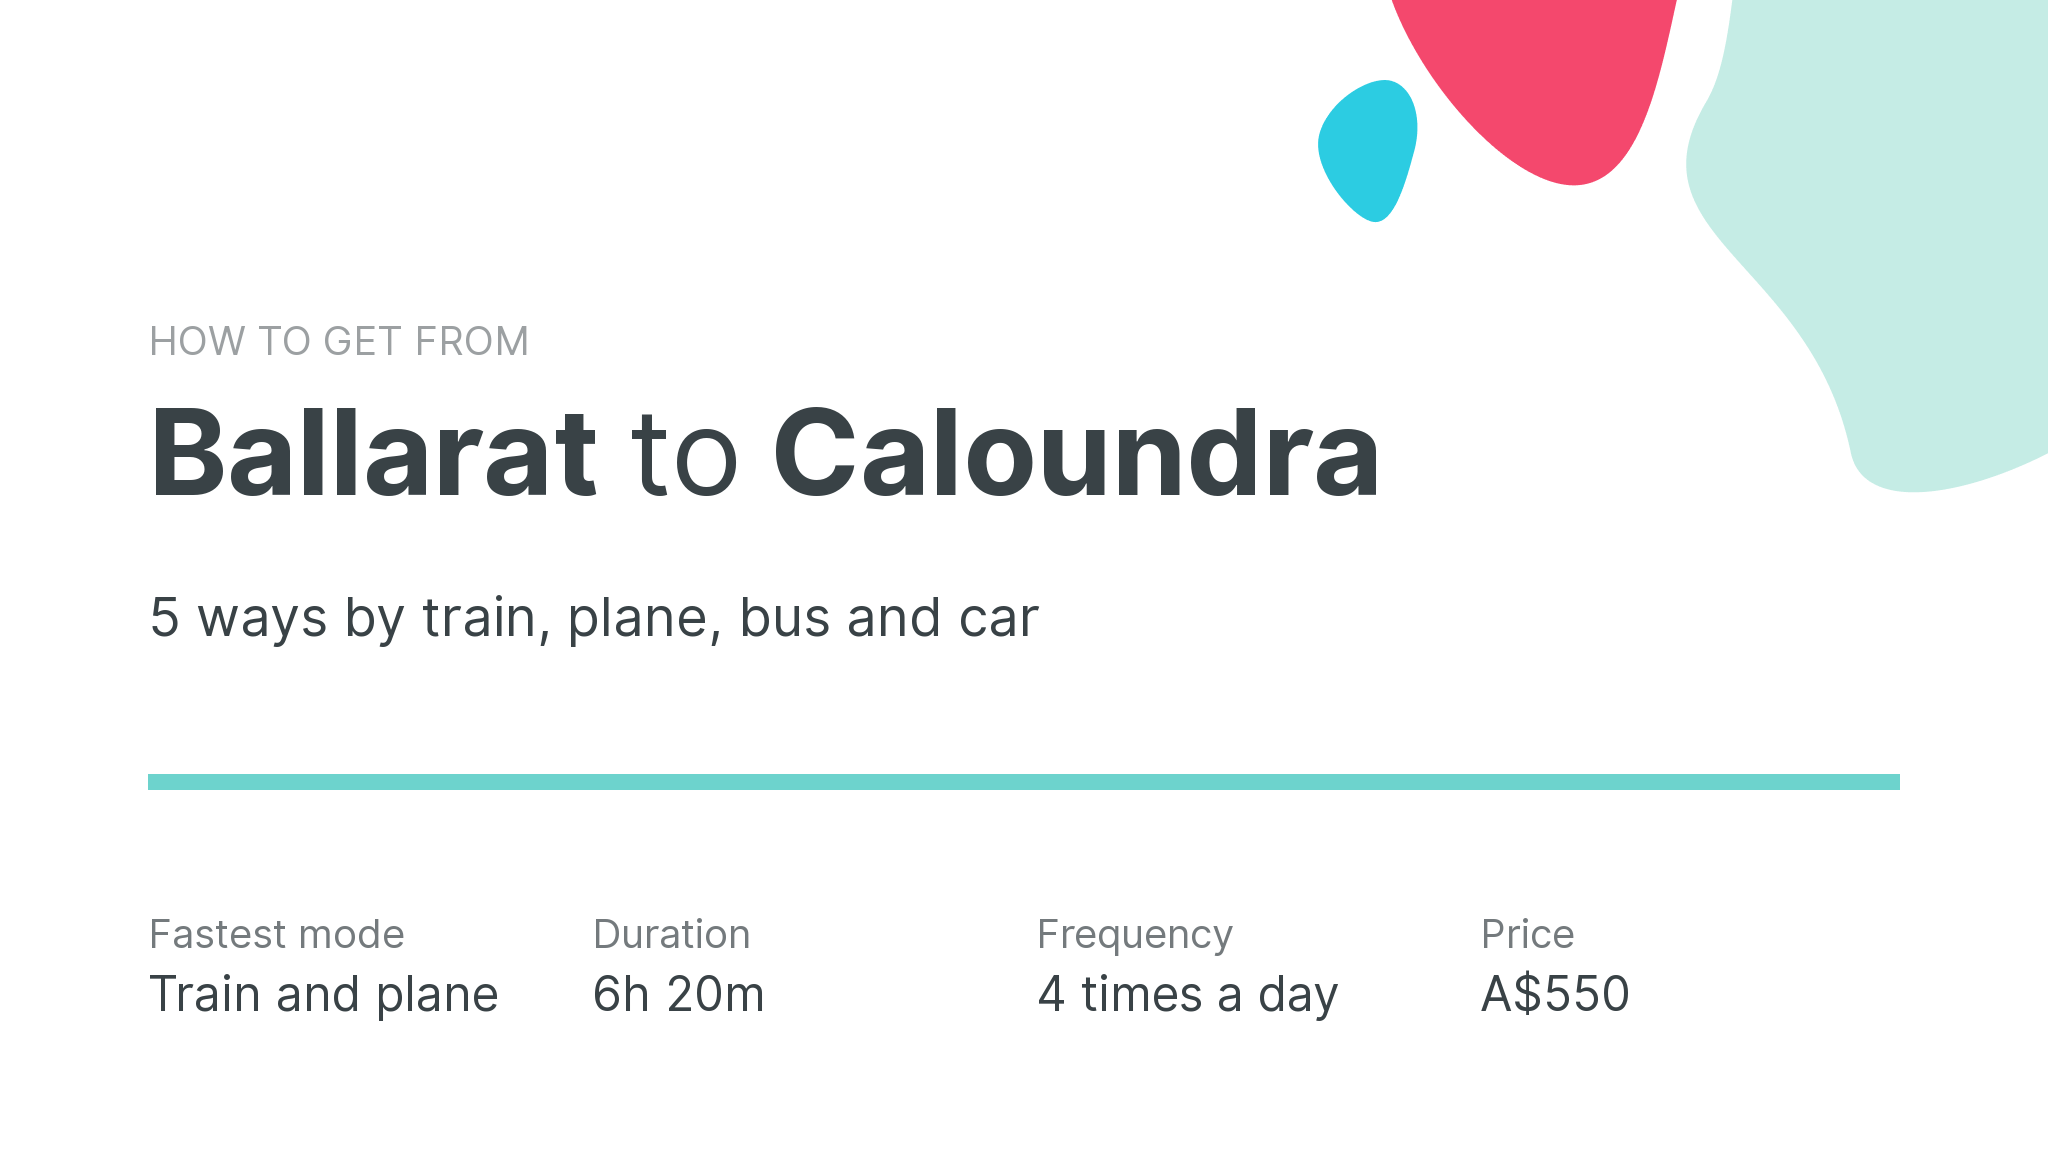 How do I get from Ballarat to Caloundra